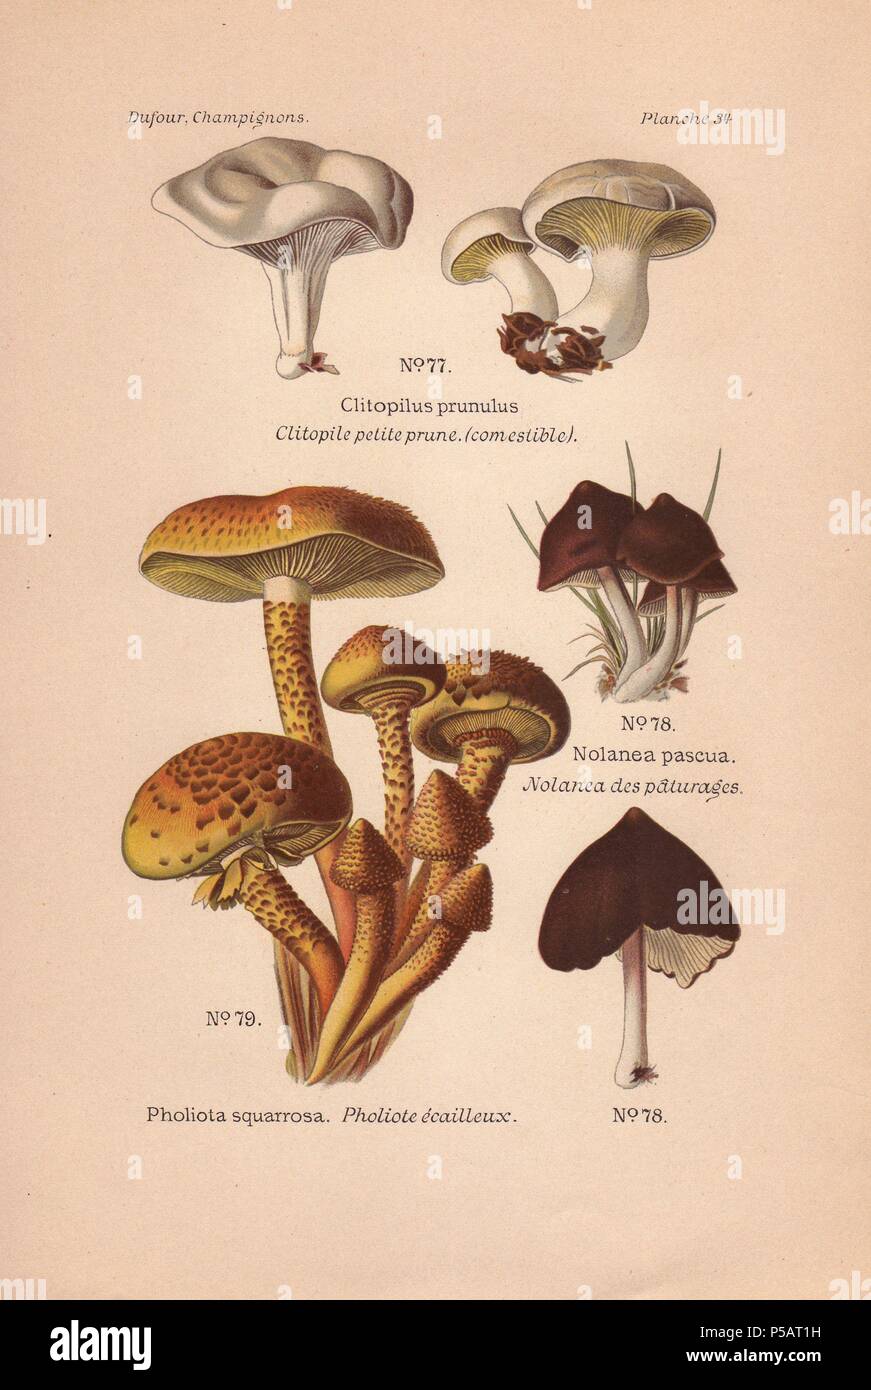 Edible sweetbread mushroom Clitopilus prunulus, shaggy Pholiota squarrosa, and chocolate-coloured Nolanea pascua mushrooms.. . Chromolithograph from Leon Dufour's 'Atlas des Champignons Comestibles et Veneneux' (1891). Stock Photo